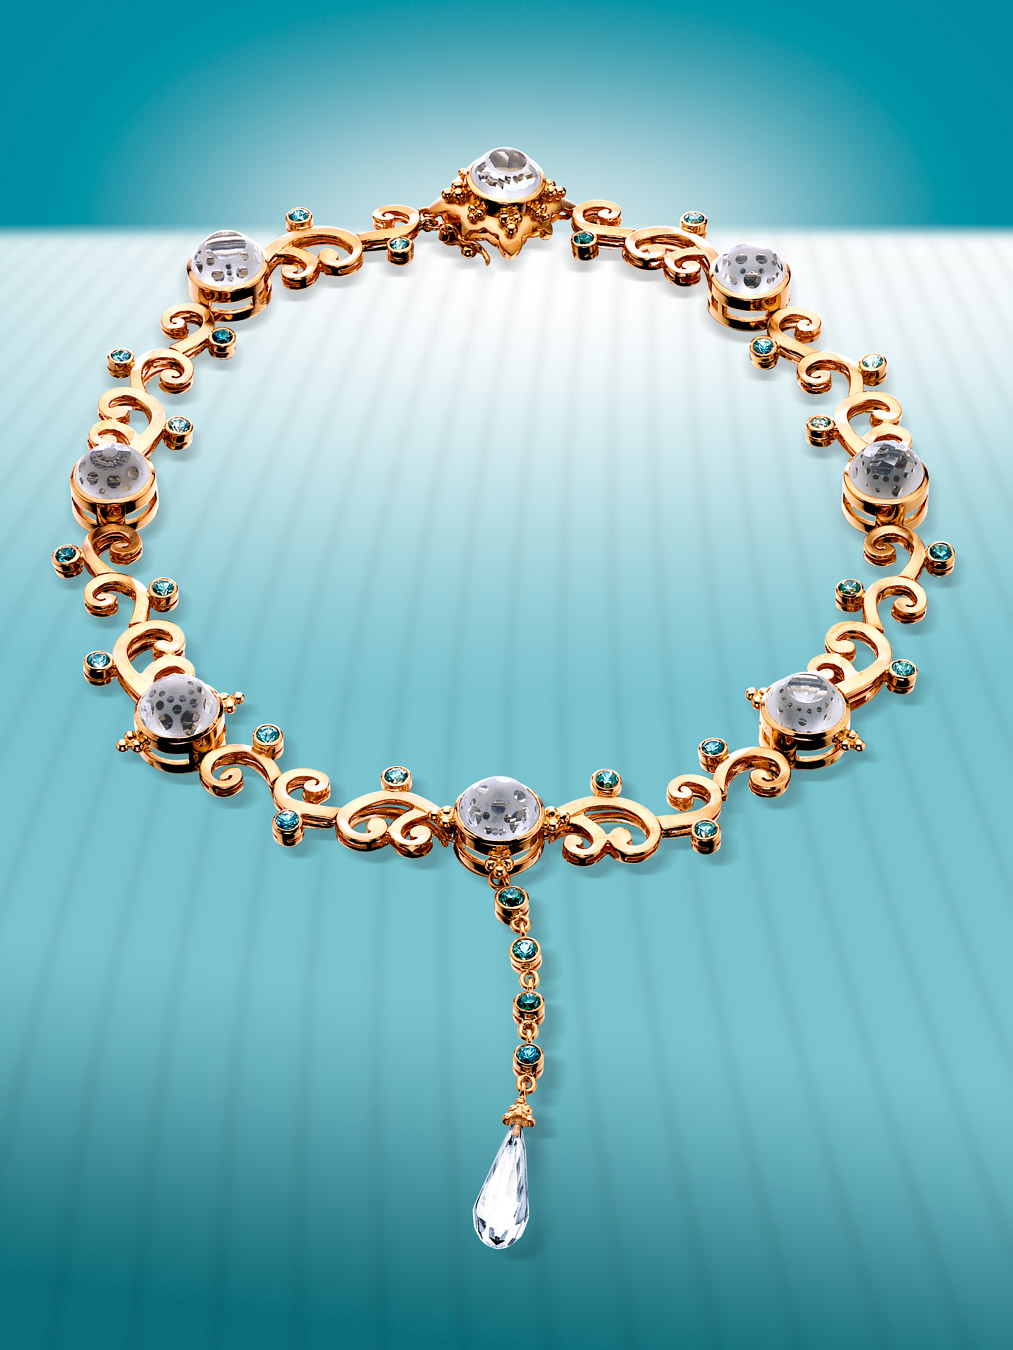 Jewelry_181